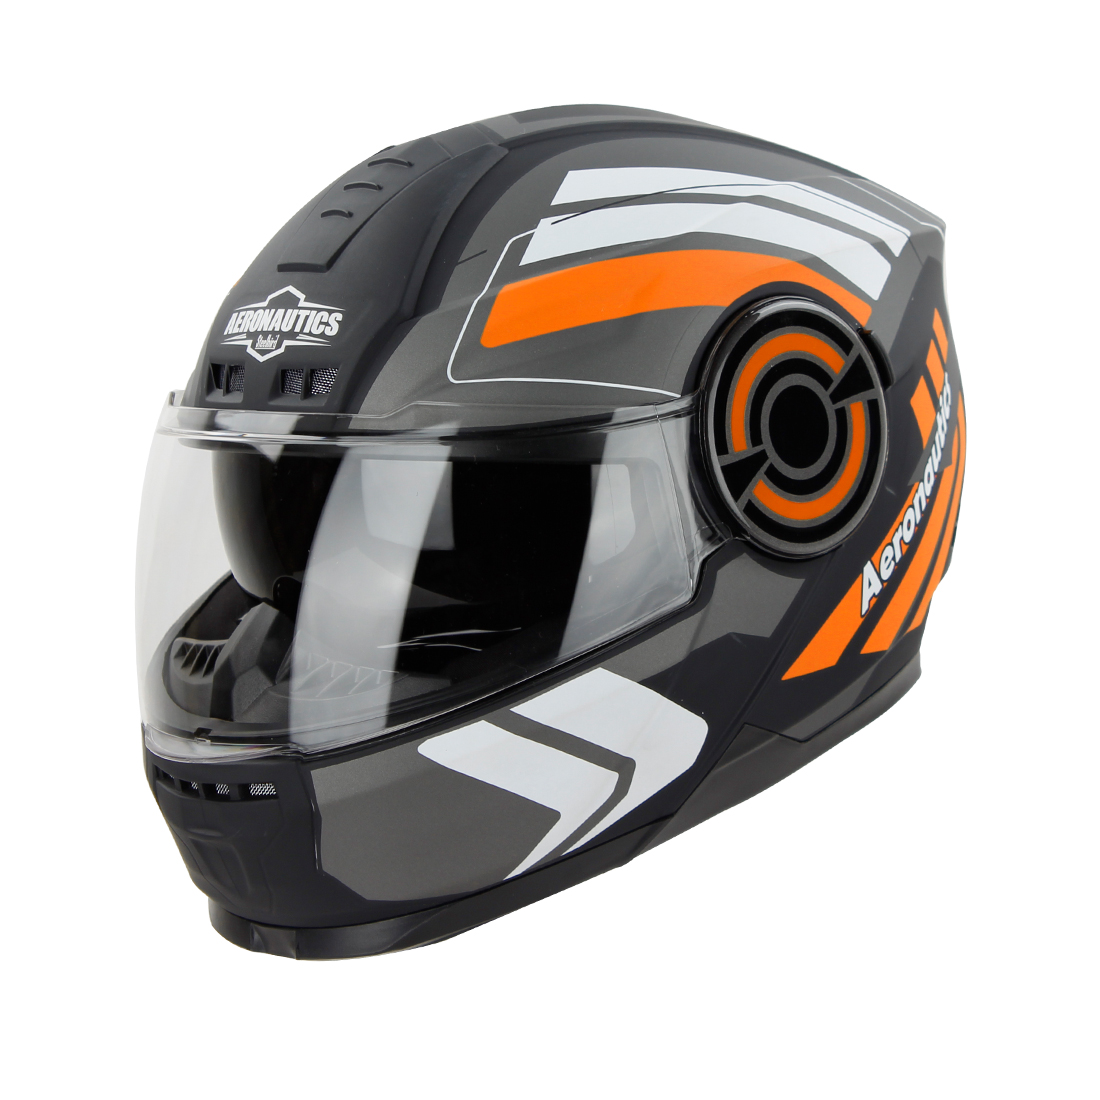 Steelbird SBH-40 Vanguard ISI Certified Full Face Graphic Helmet for Men and Women with Inner Sun Shield (Matt Black Orange)